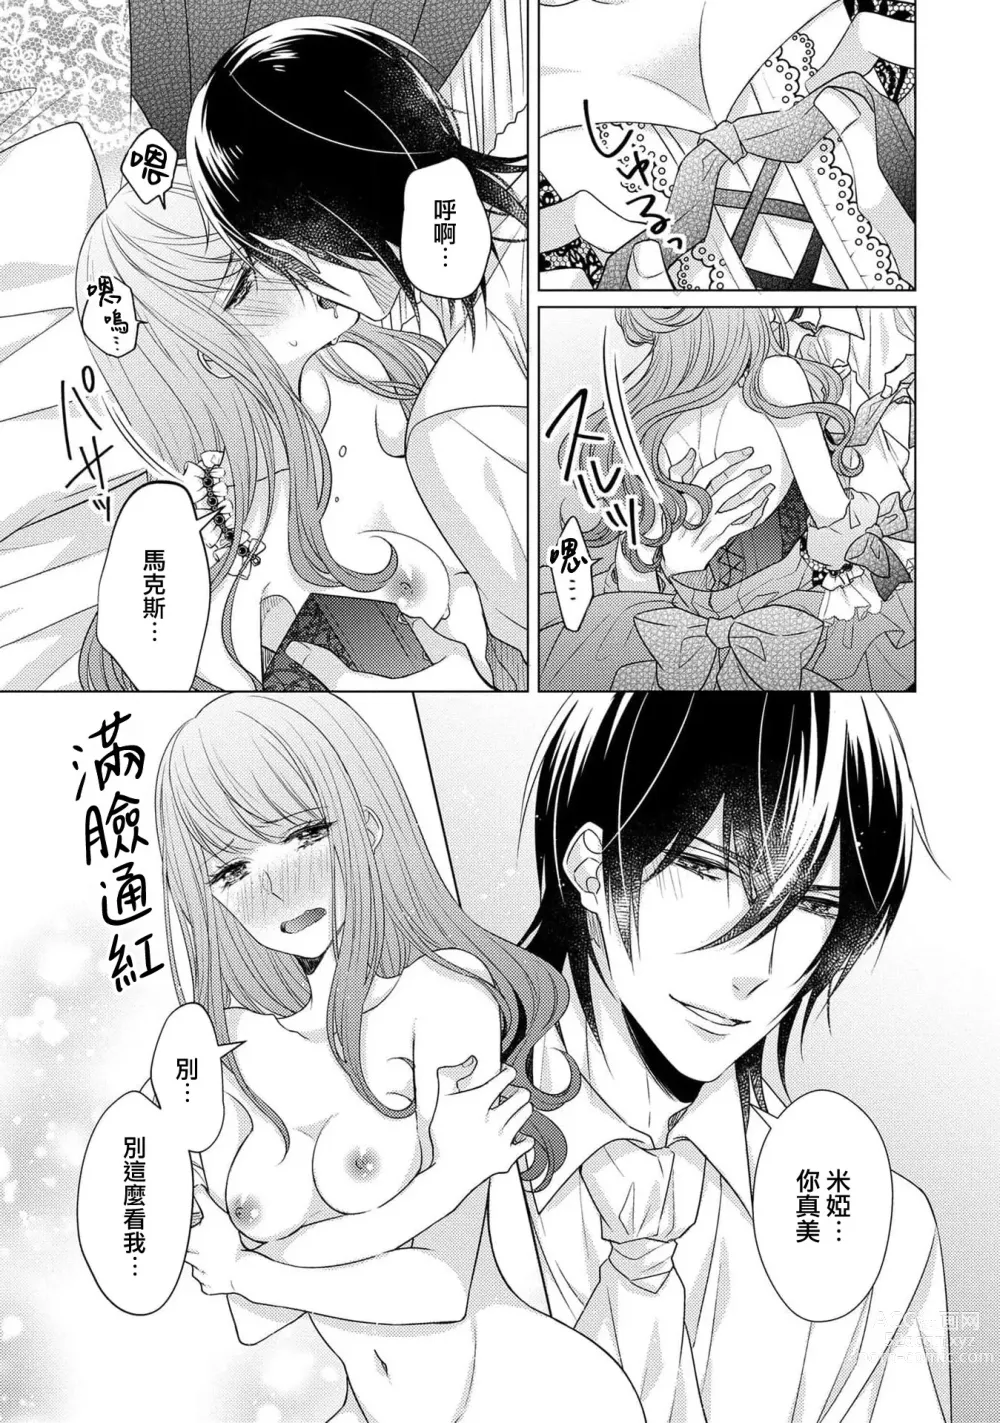 Page 161 of manga 宠爱王子和处女少女~30岁还是处女，这一次和真壁社长签订了炮友契约~ 1-5 end